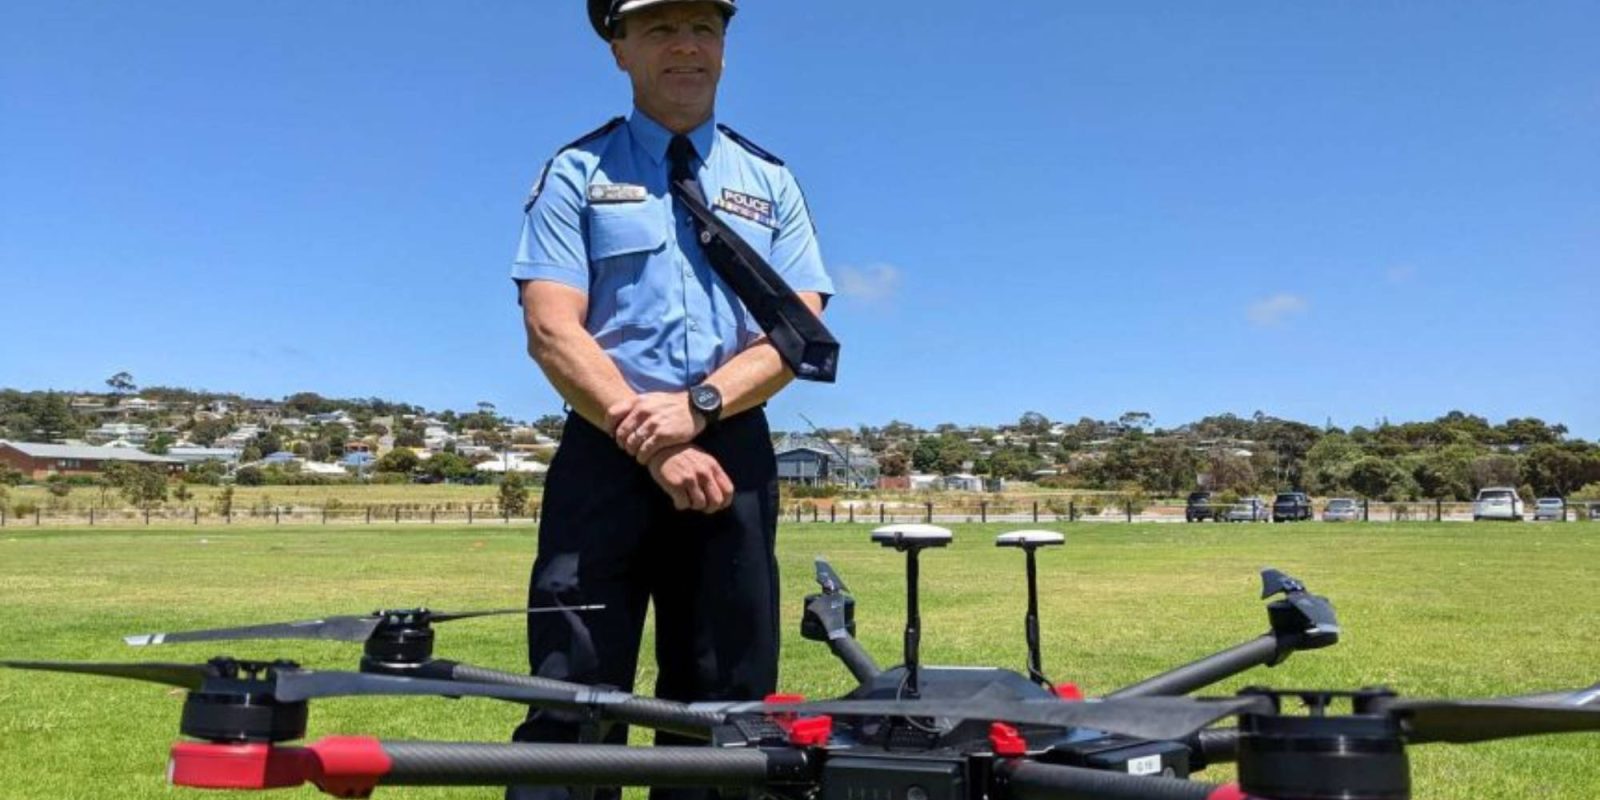 Western Australia's police drones